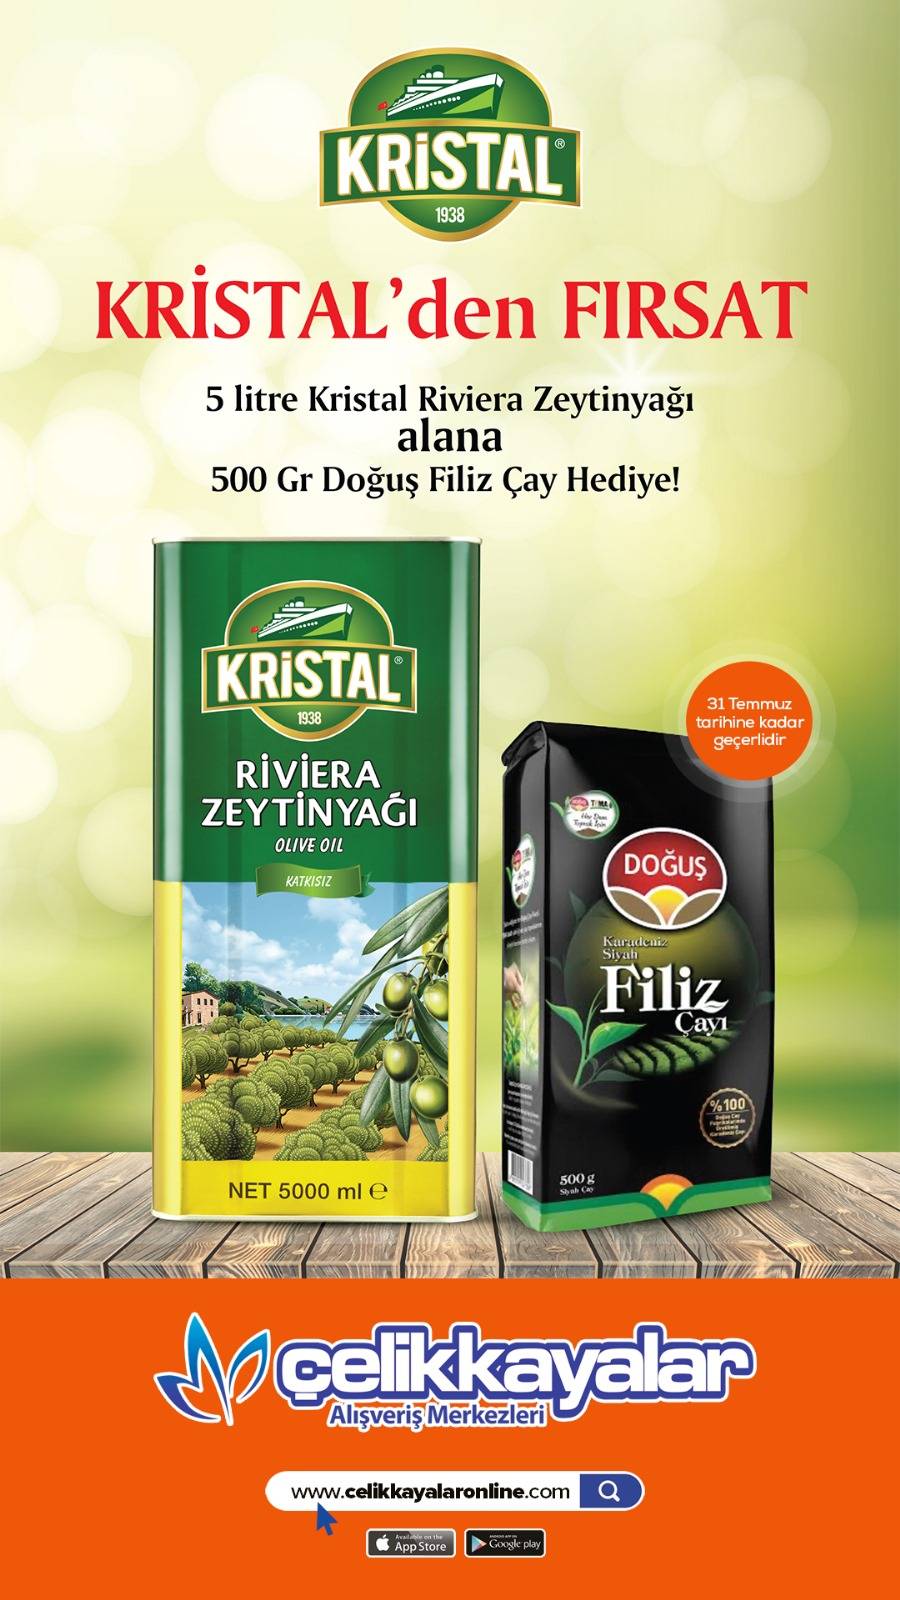 Konya’nın zincir marketi duyurdu: Yağ alana çay bedava 16